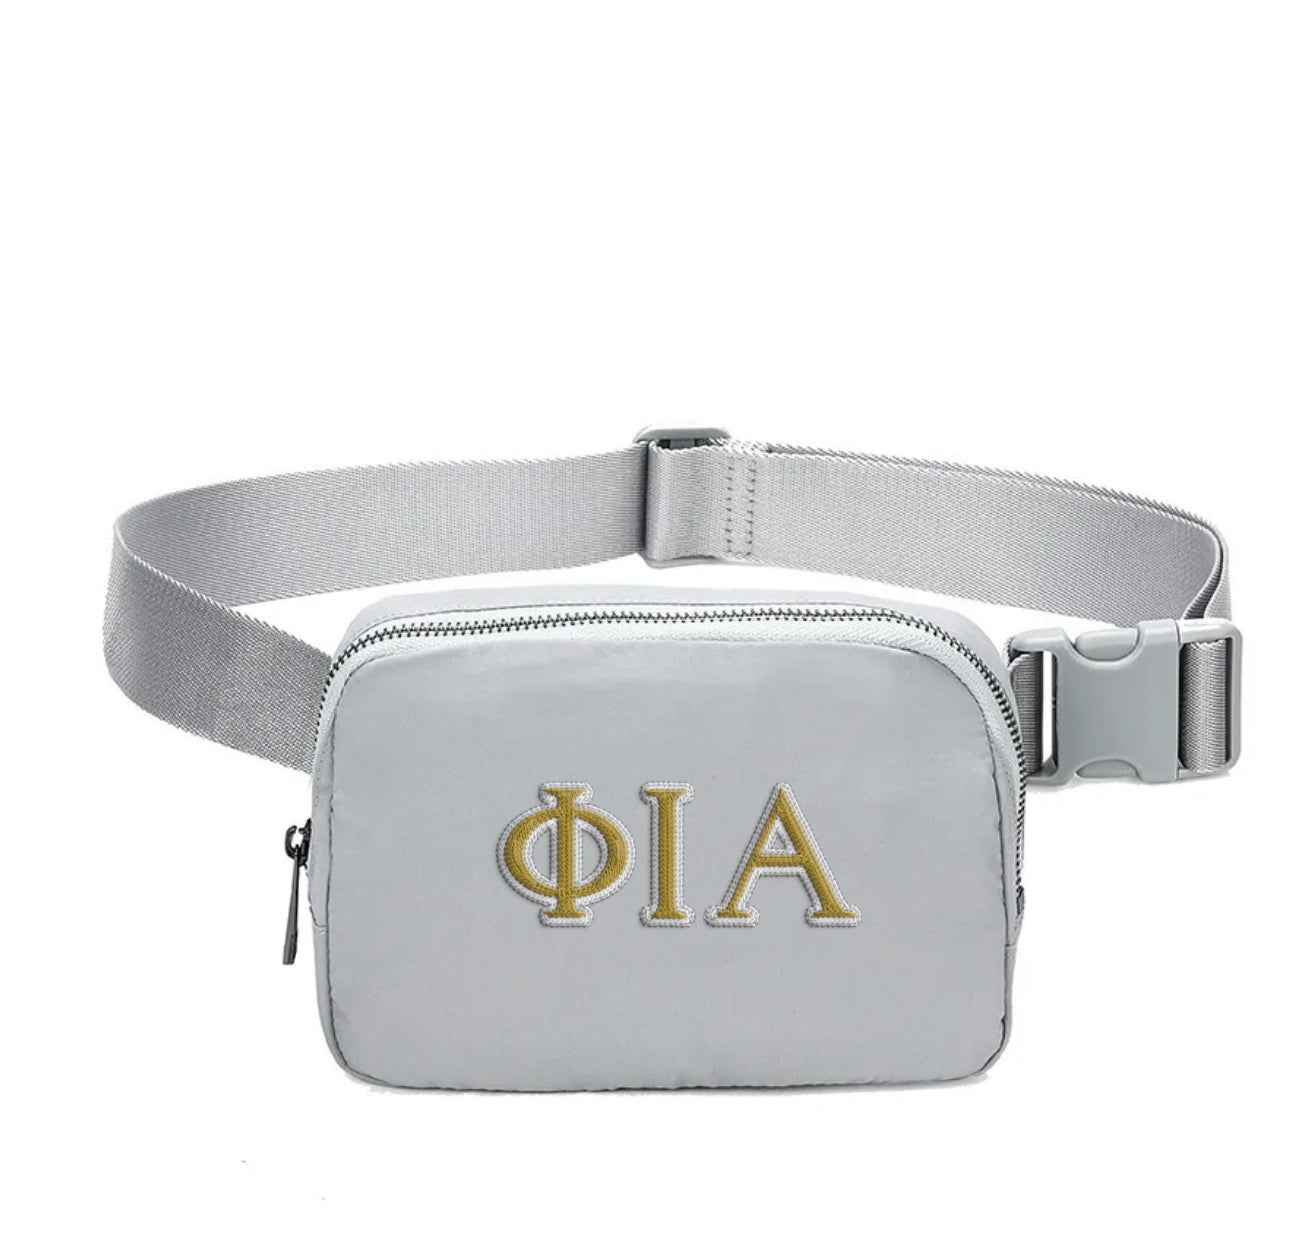 Phi Iota Alpha Embroidered Belt Bag